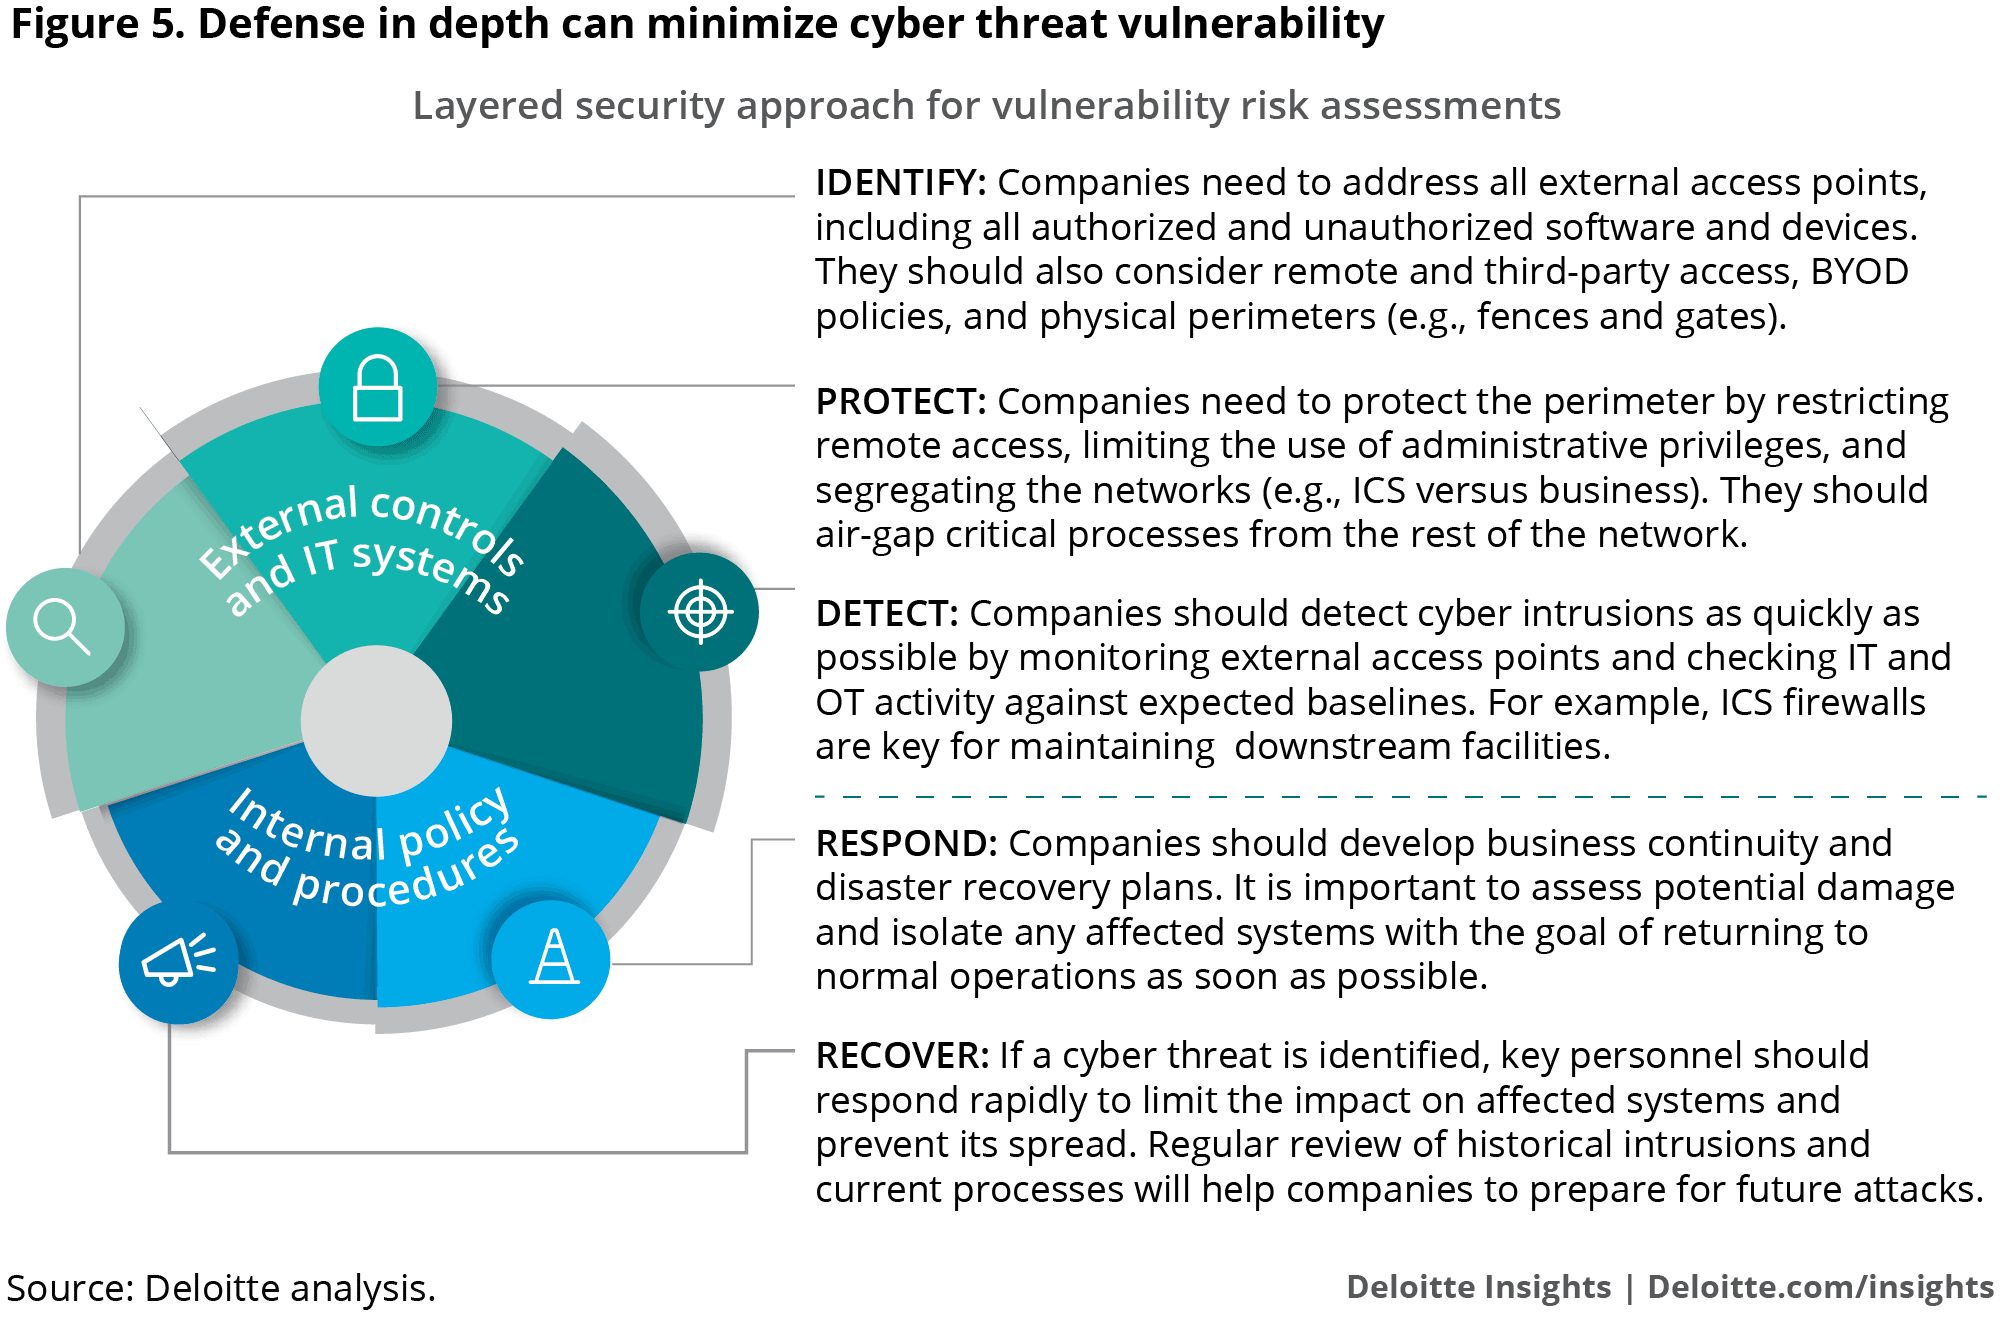 Figure 5. Defense in depth highlights cyber threat vulnerability